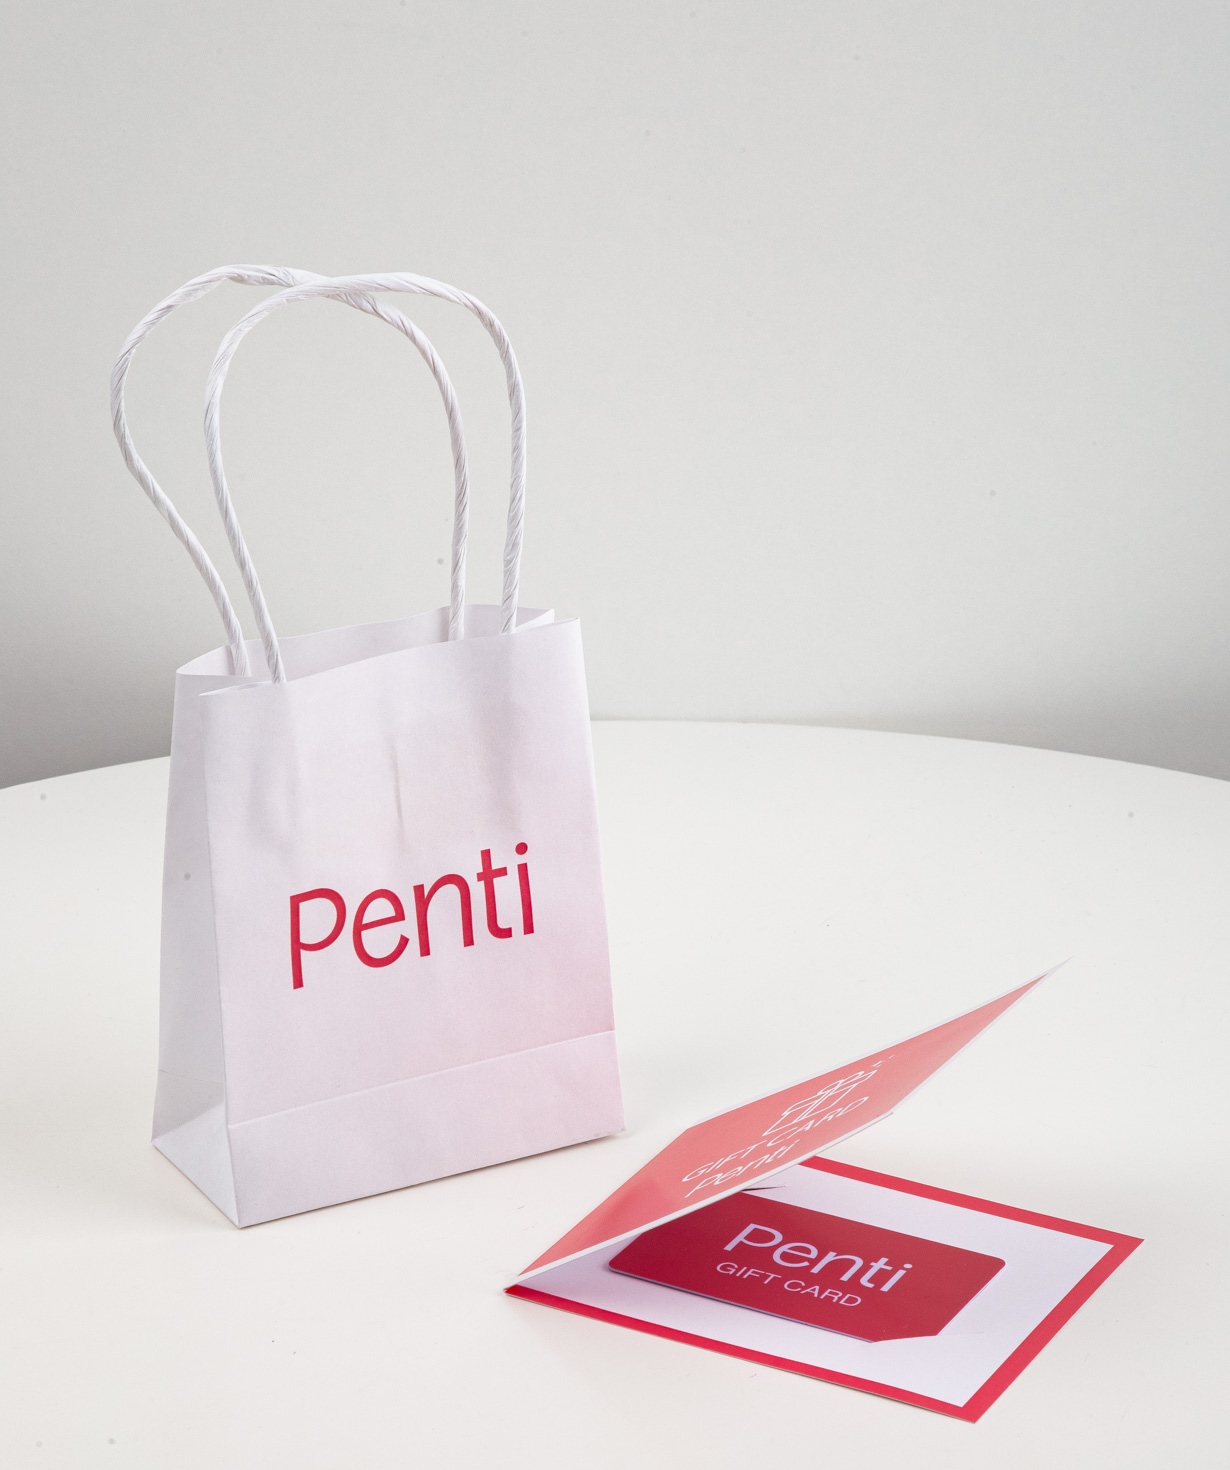 Gift card «Penti» 20.000 dram